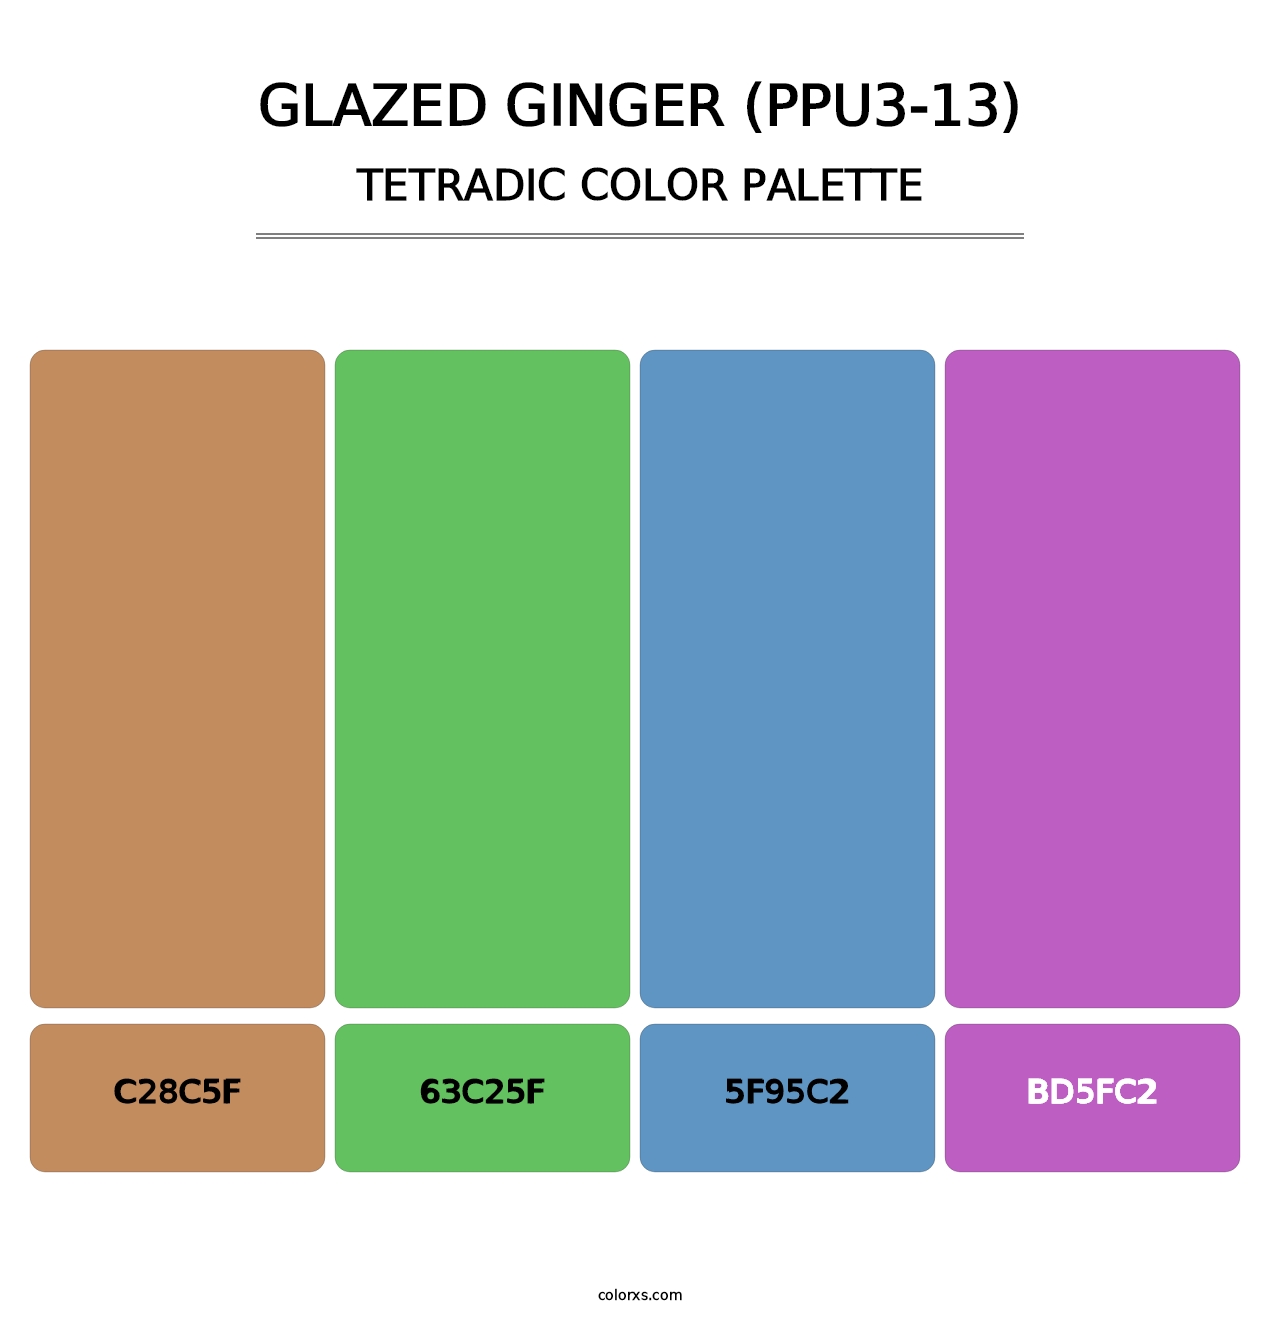 Glazed Ginger (PPU3-13) - Tetradic Color Palette